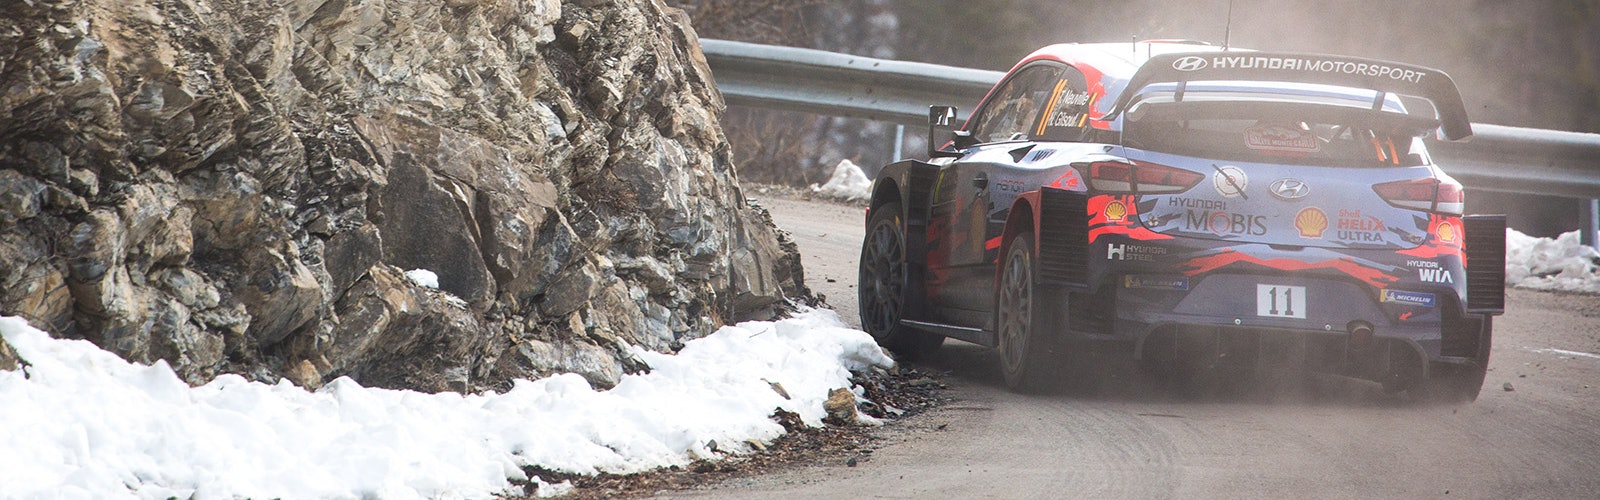 Thierry Neuville Hyundai WRC Monte Carlo Rally 2020